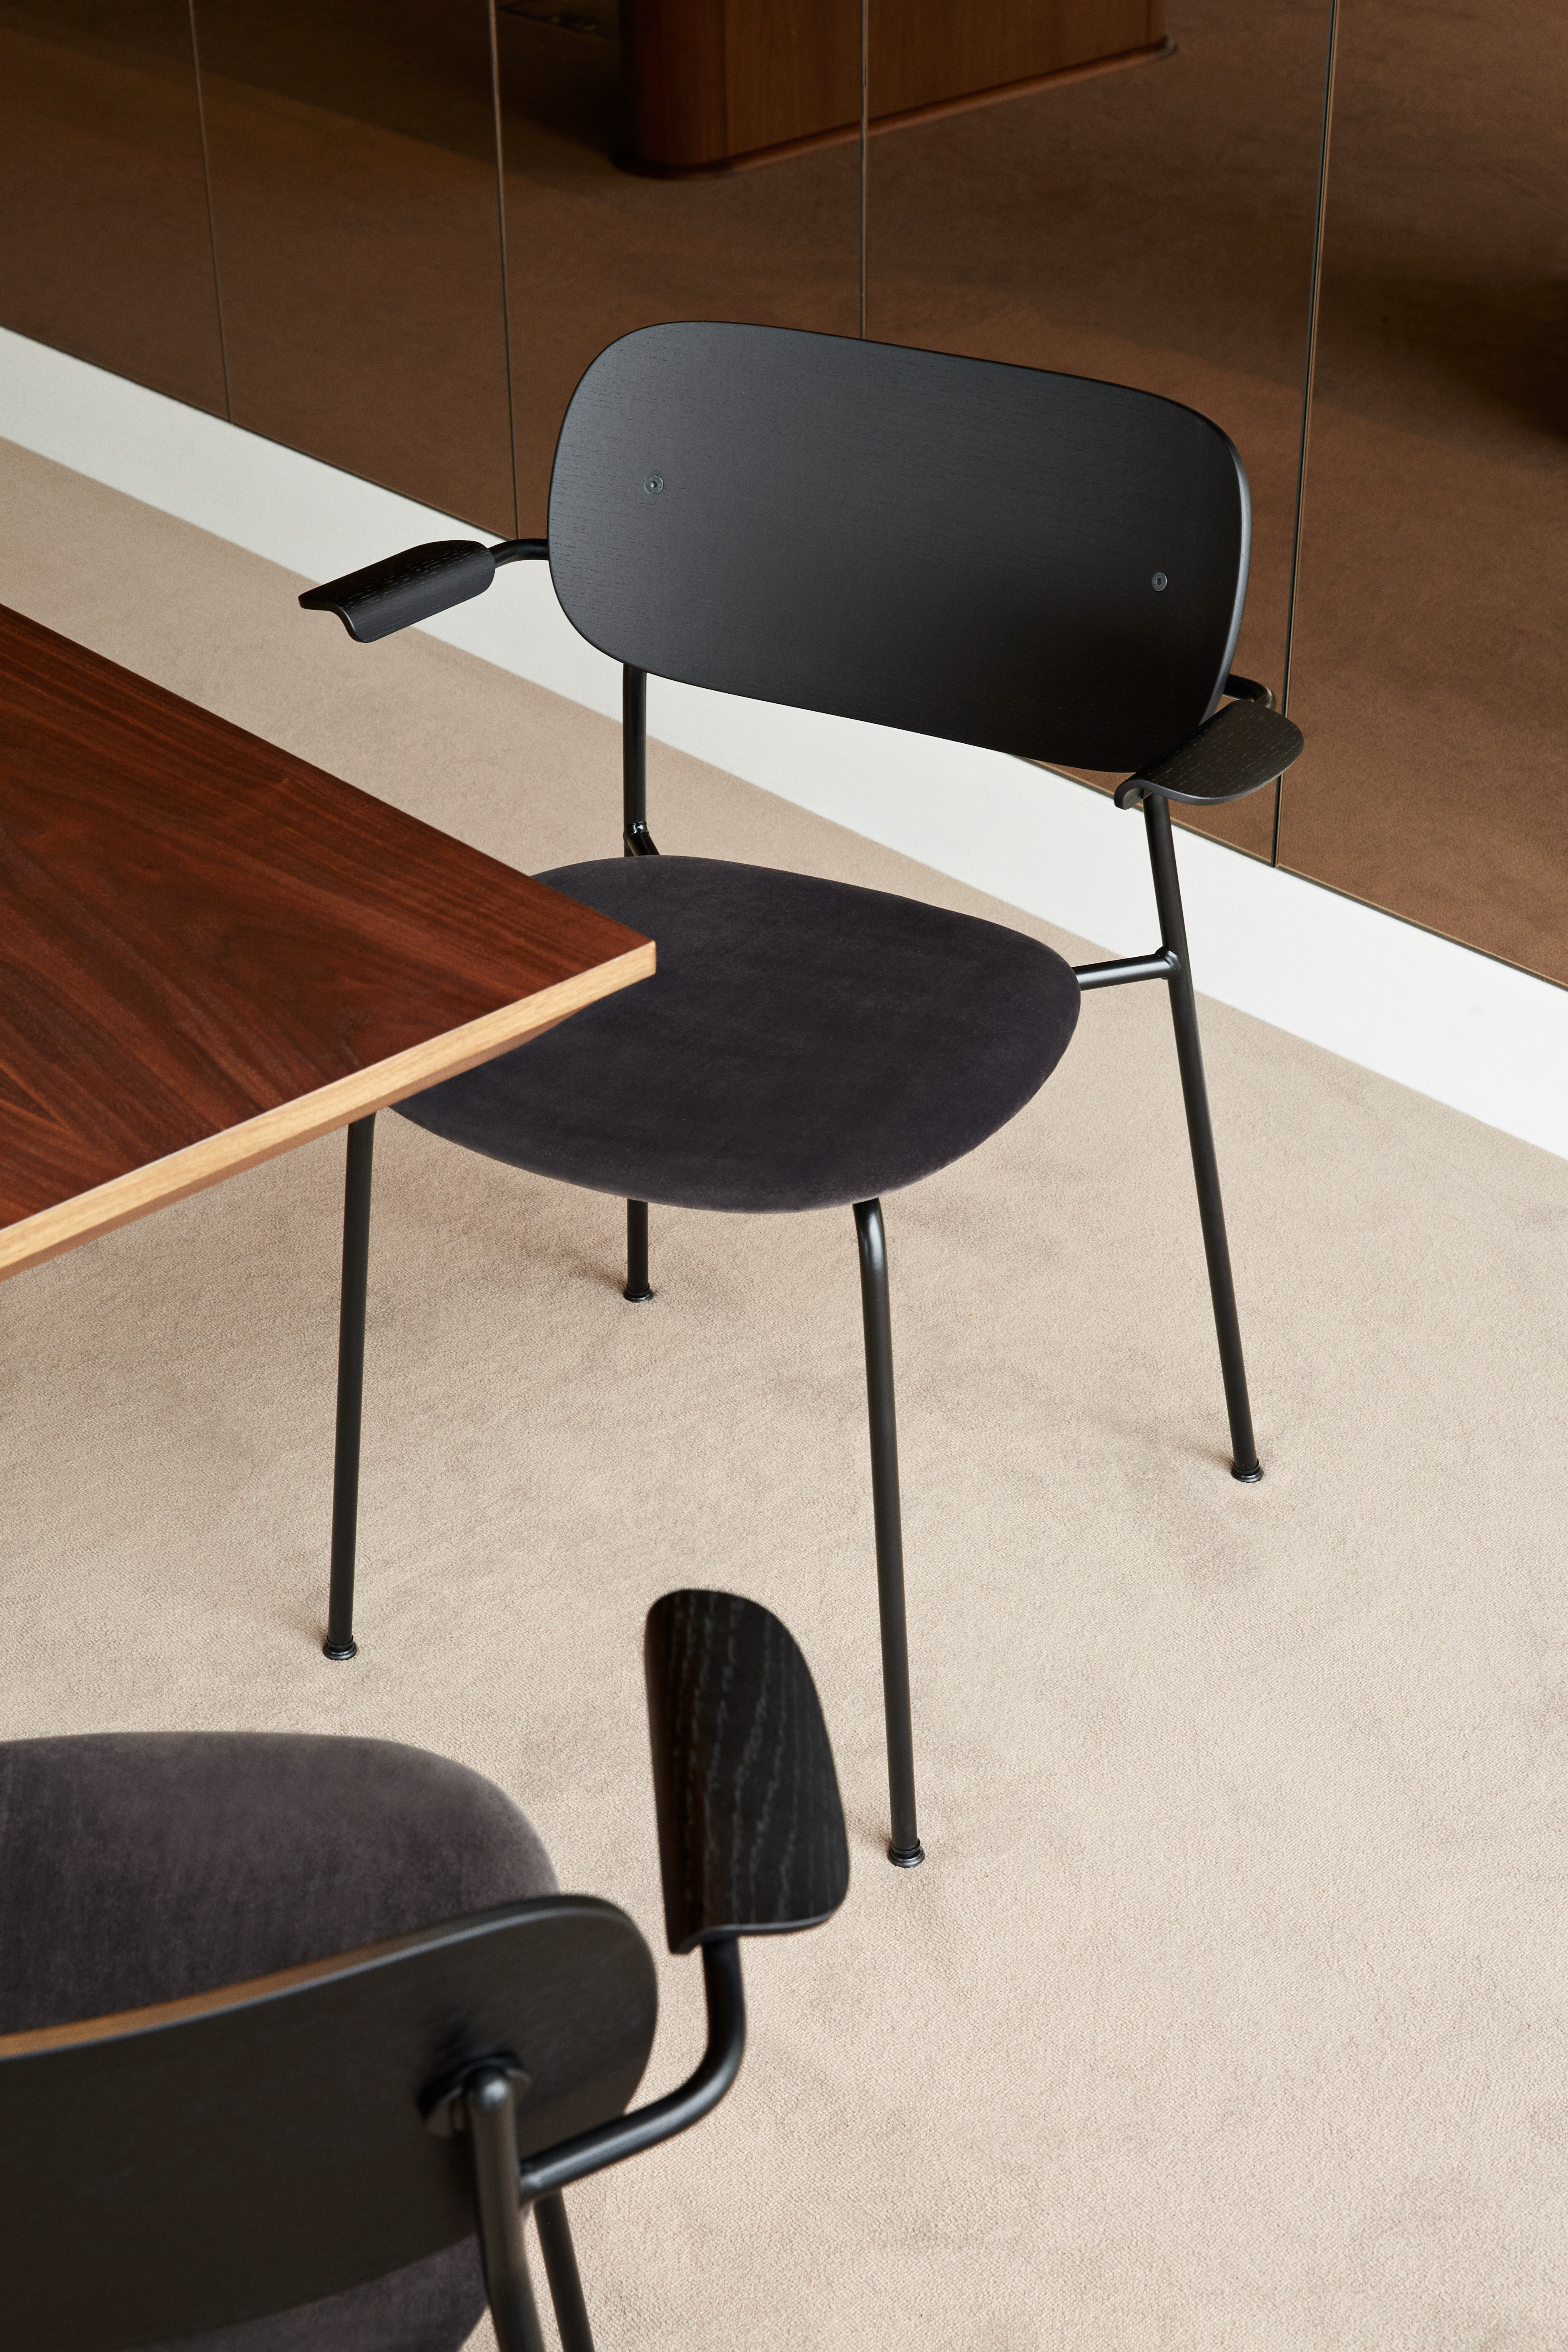 De Co Chair die Els in samenwerking met Norm Architects ontwikkelde voor fabrikant Menu.